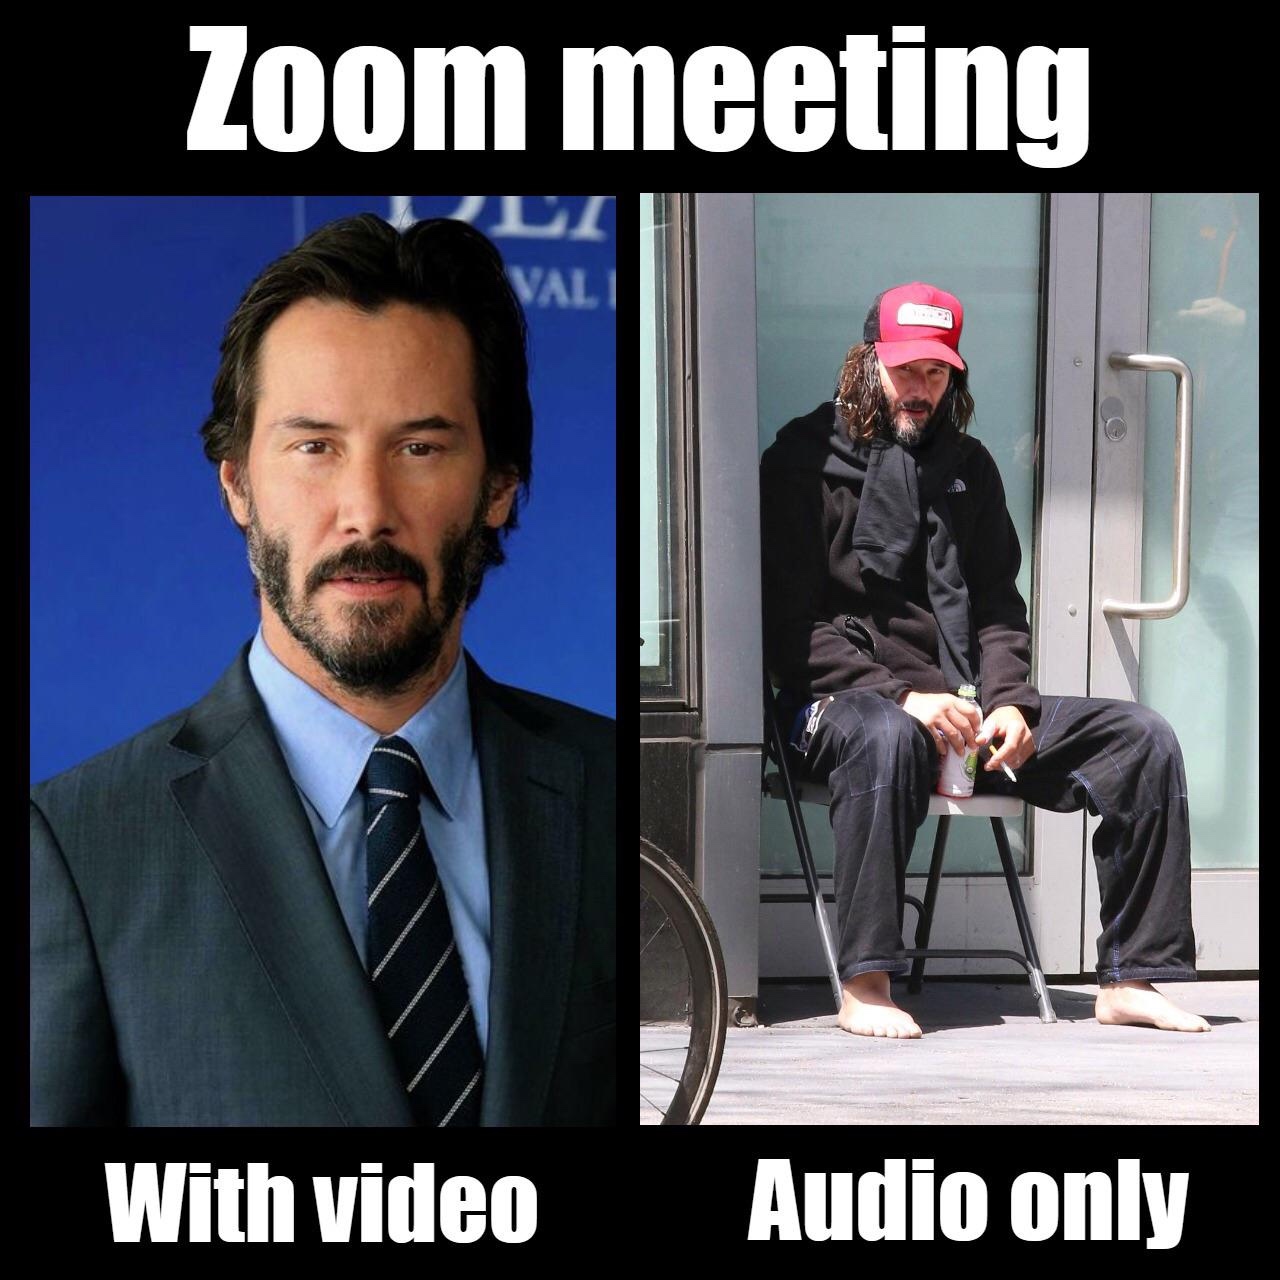 keanu reeves smoking - Zoom meeting Li Val With video Audio only